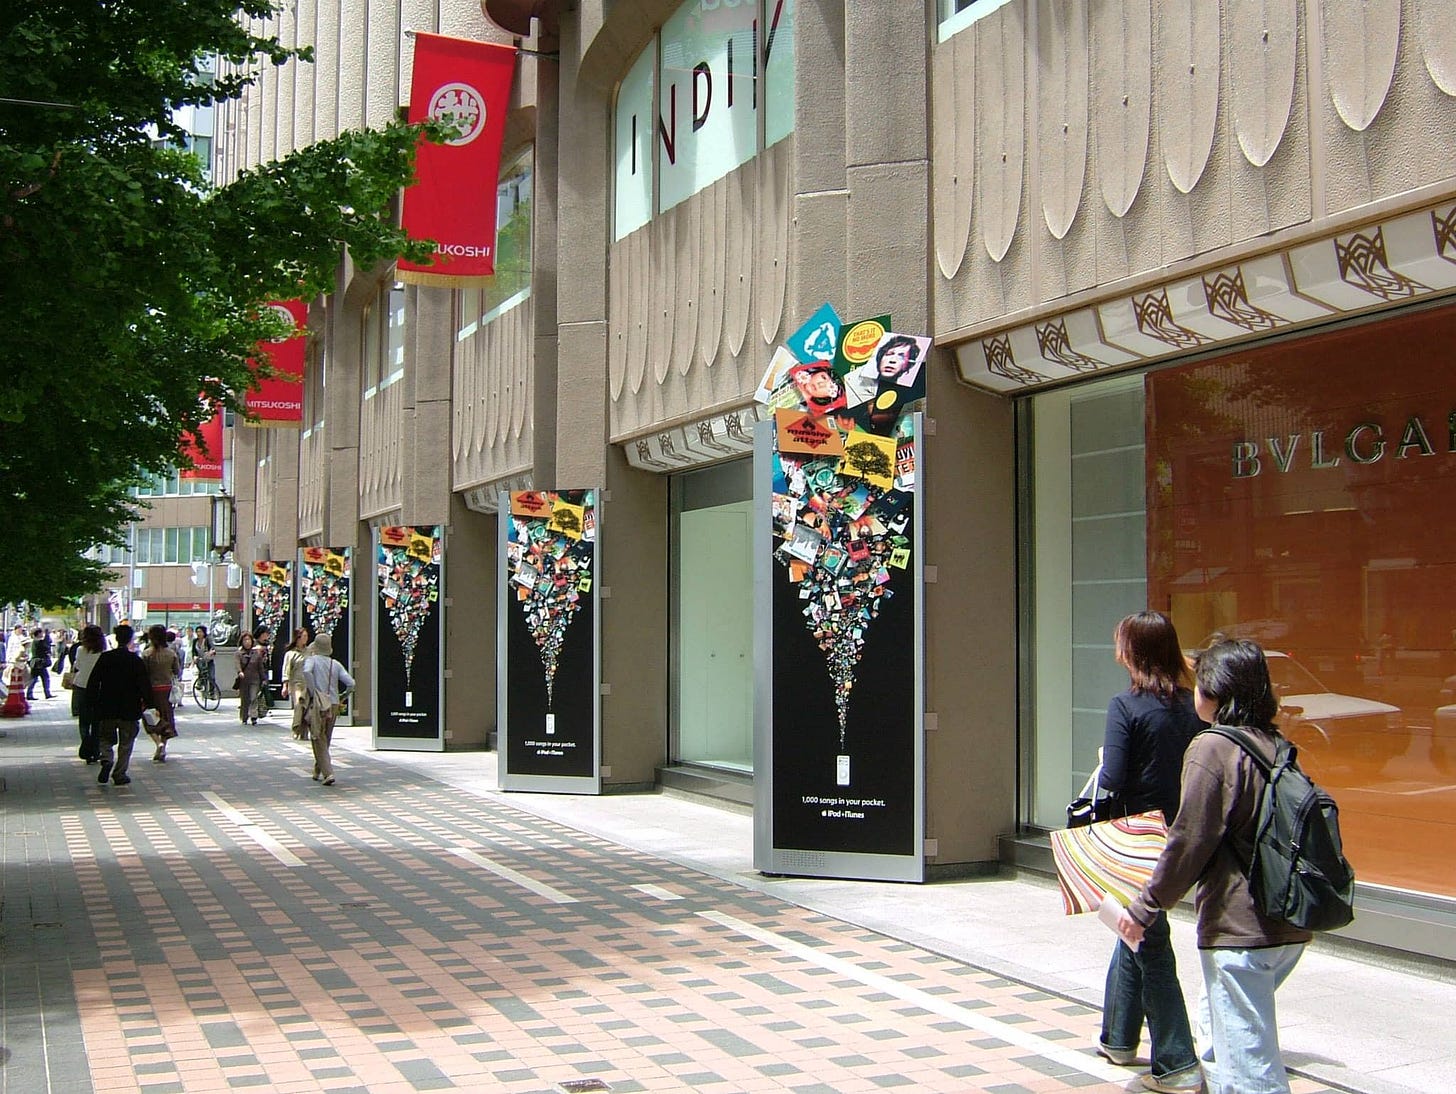 iPod banners along Mitsukoshi Sapporo.